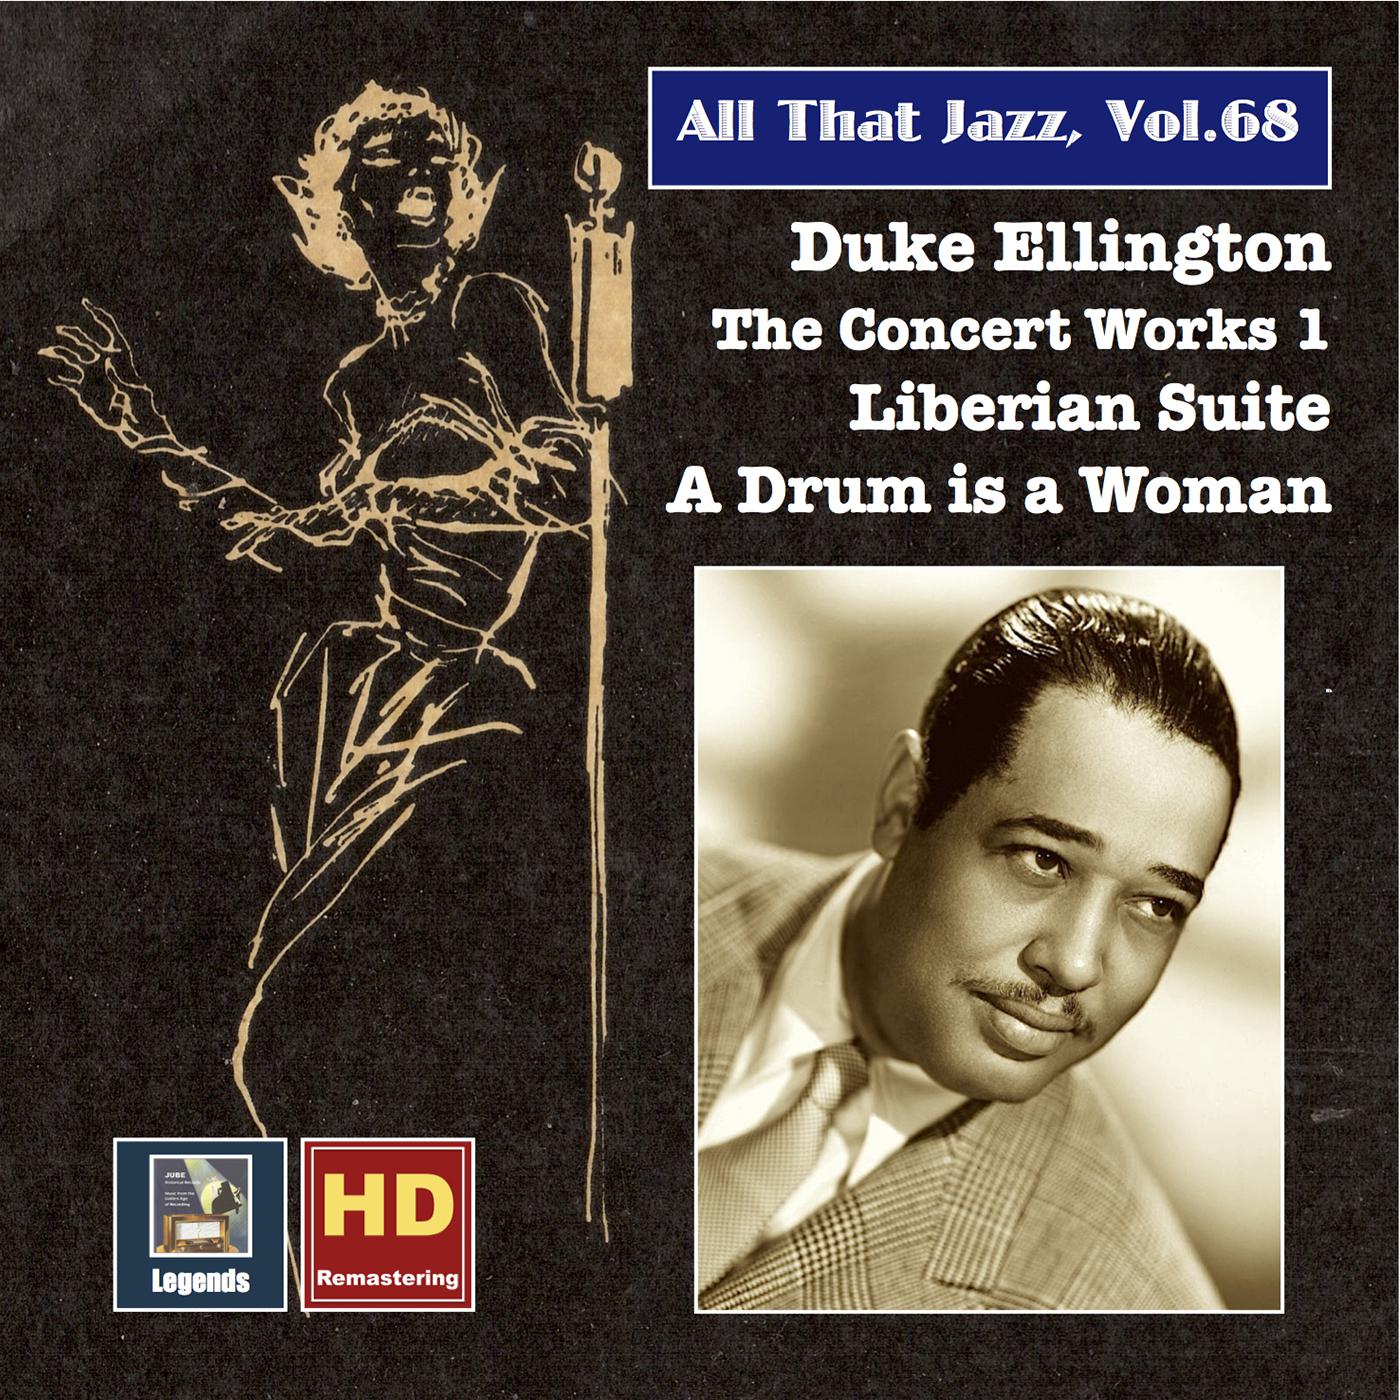 ALL THAT JAZZ, Vol. 68 - Duke Ellington The Concert Works 1: Liberian Suite / A Drums Is a Woman (1947-1956)